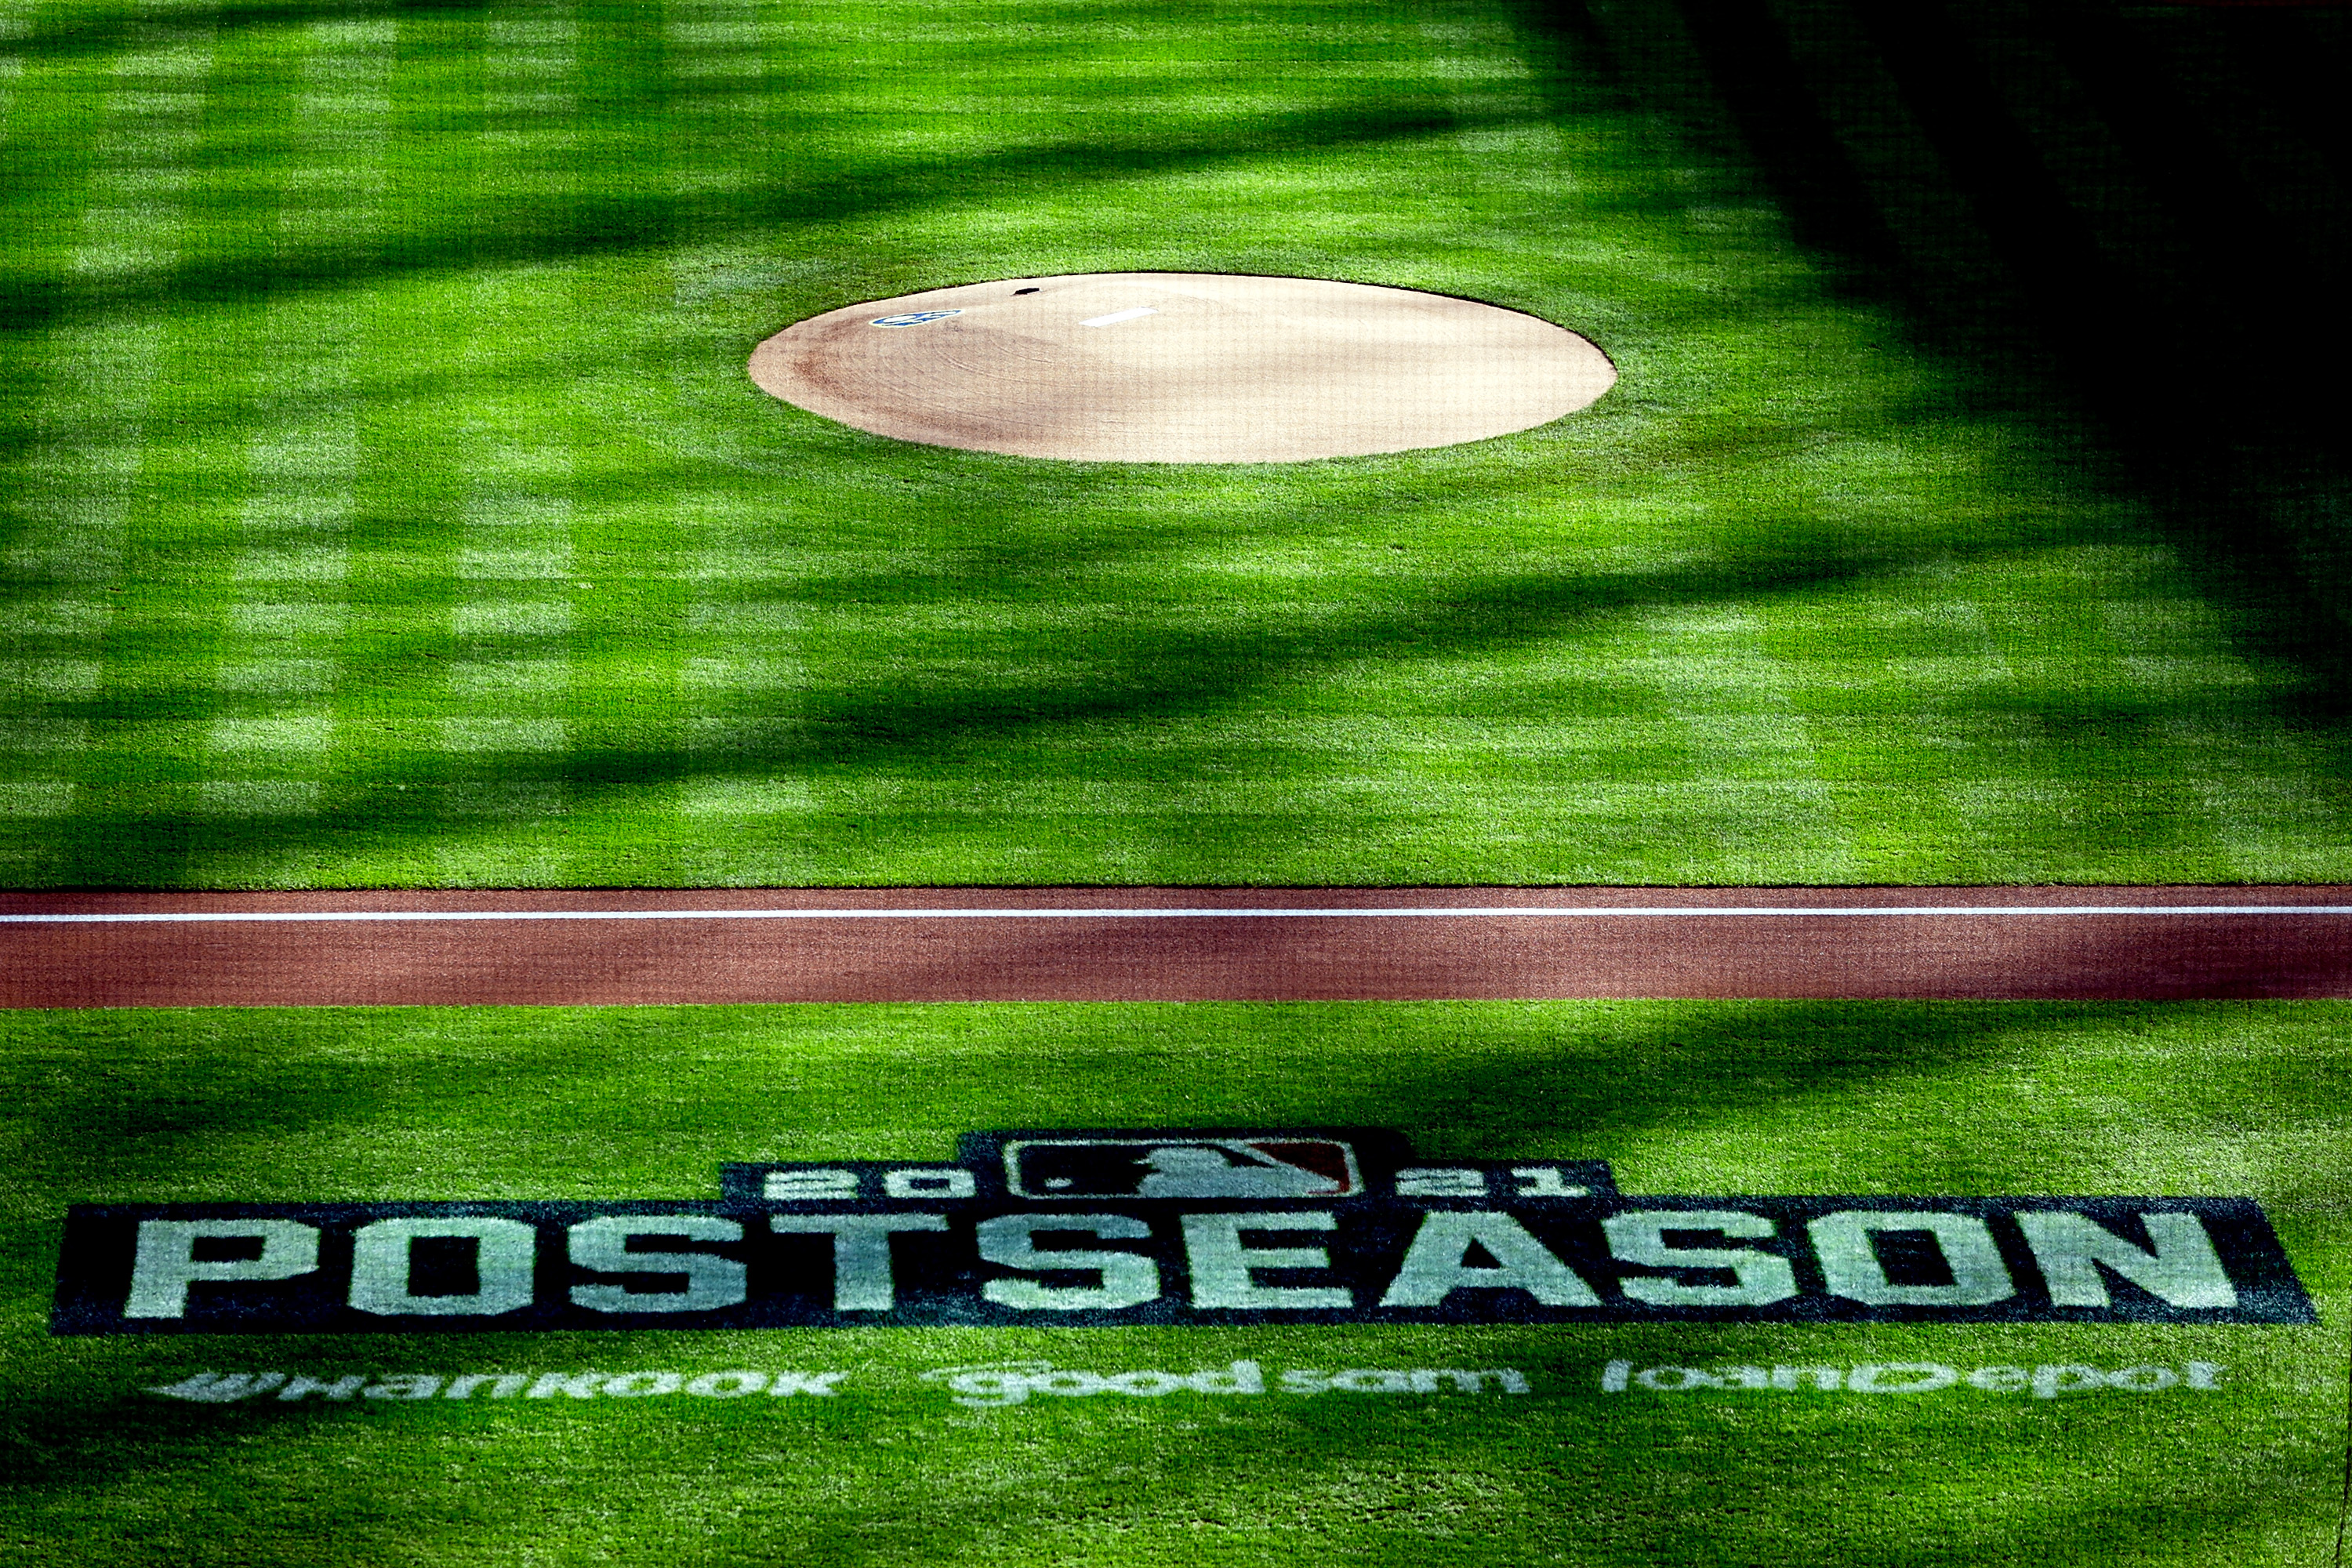 MLB Offseason Dates: Key Dates for 2021-22 MLB Offseason Including Awards, Free Agency, CBA, Winter Meetings & More